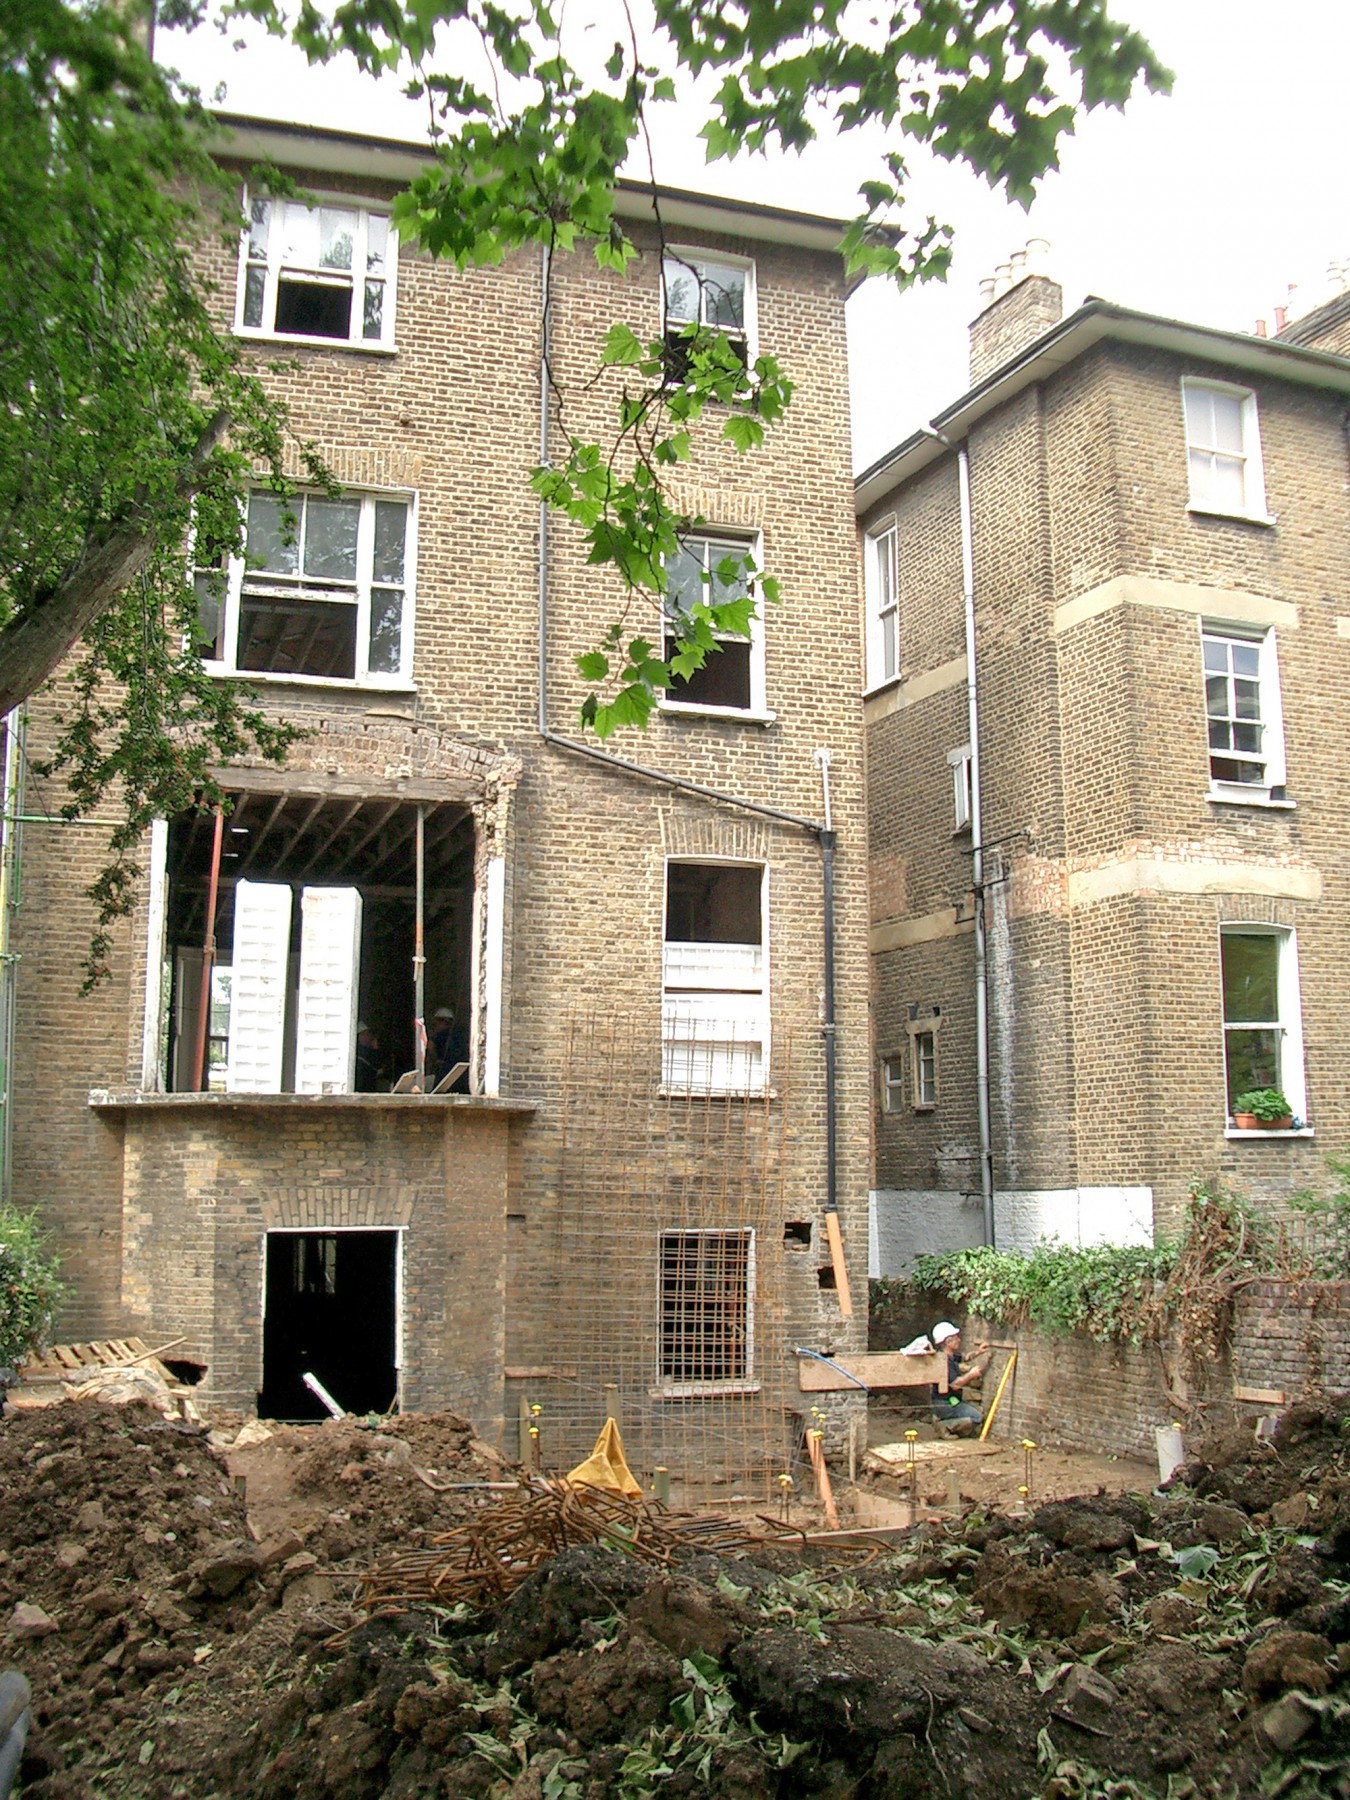 Kander-house-Primrose-hill-London-residential-home-contemporary-interior-Riba-award-victorian-Jamie-Fobert-Architects-construction-site-3